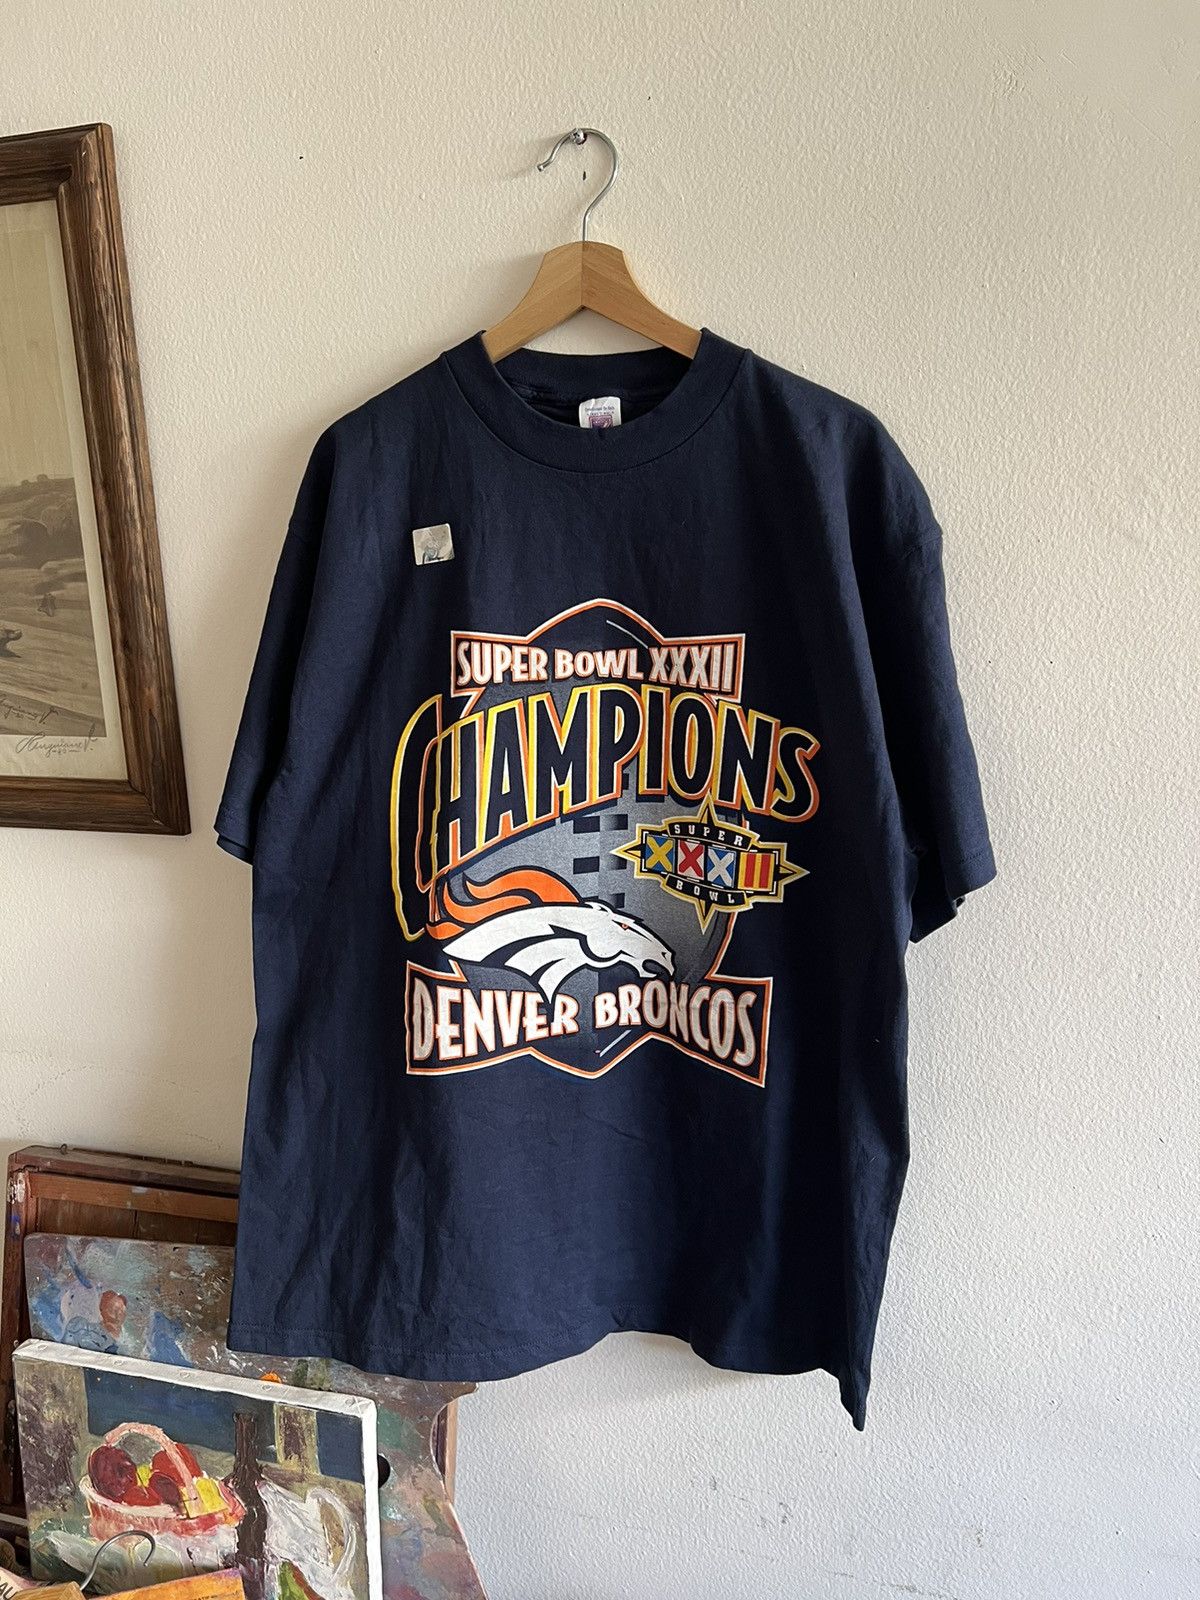 Vintage 1997 Denver Broncos Super Bowl XXXII Champions Tee